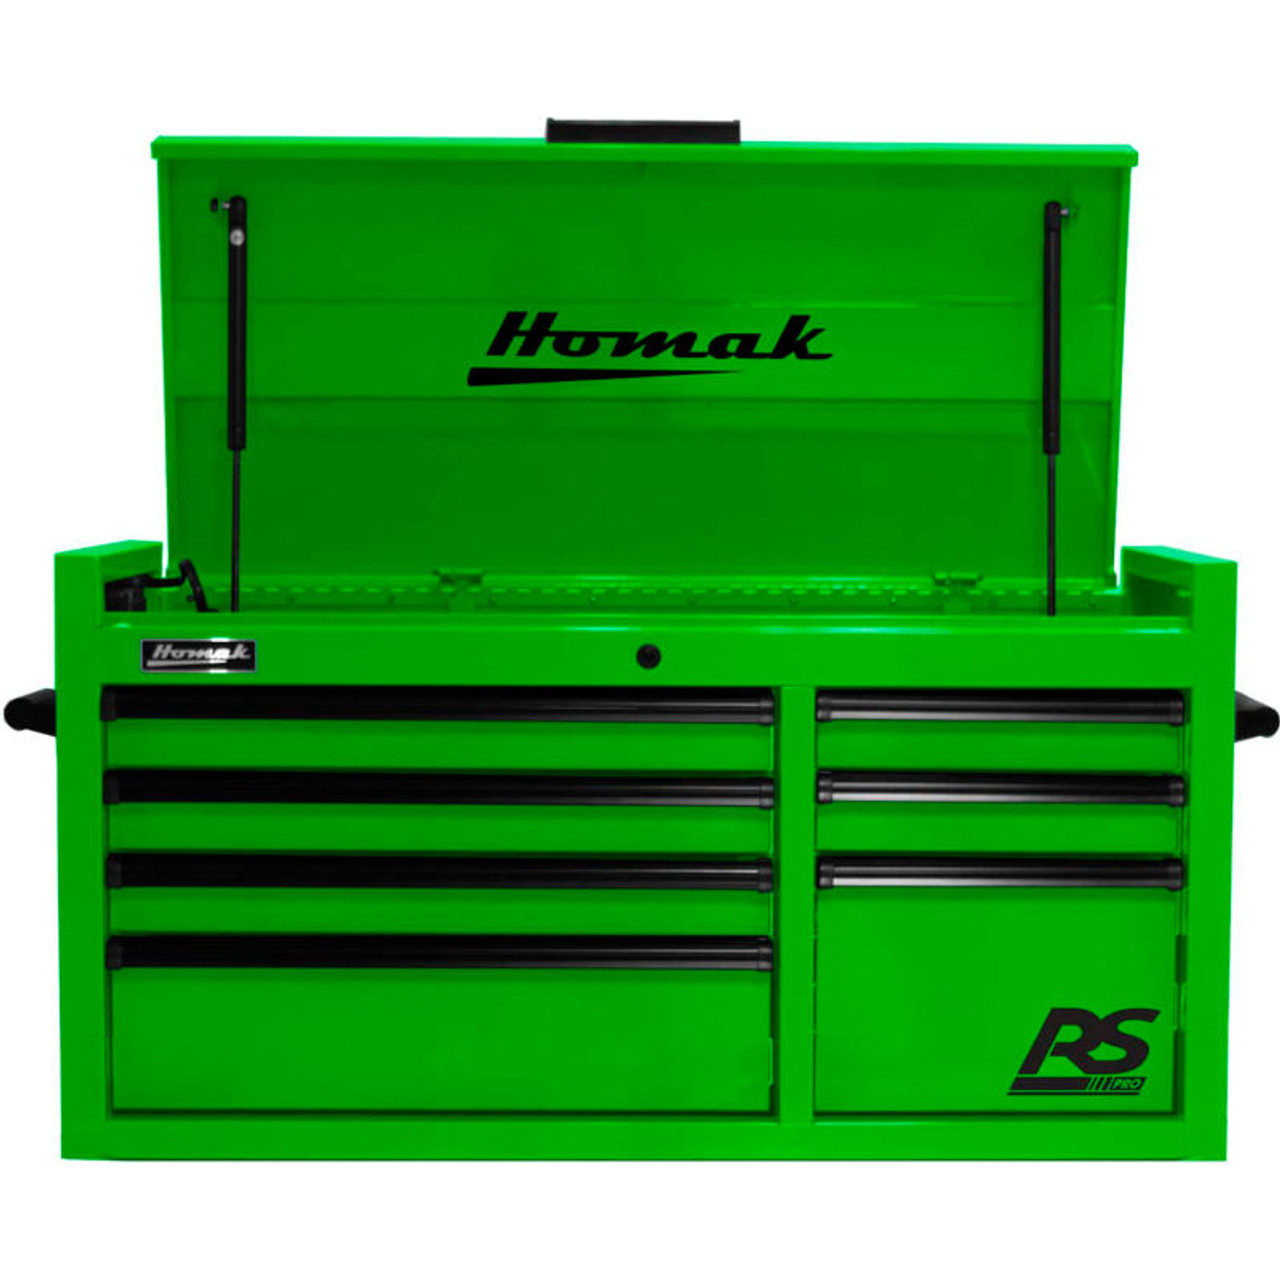 Homak LG02004173 RS Pro Series 40.5 X 23.5 X 21.37 -7 Drawer Green Tool  Chest